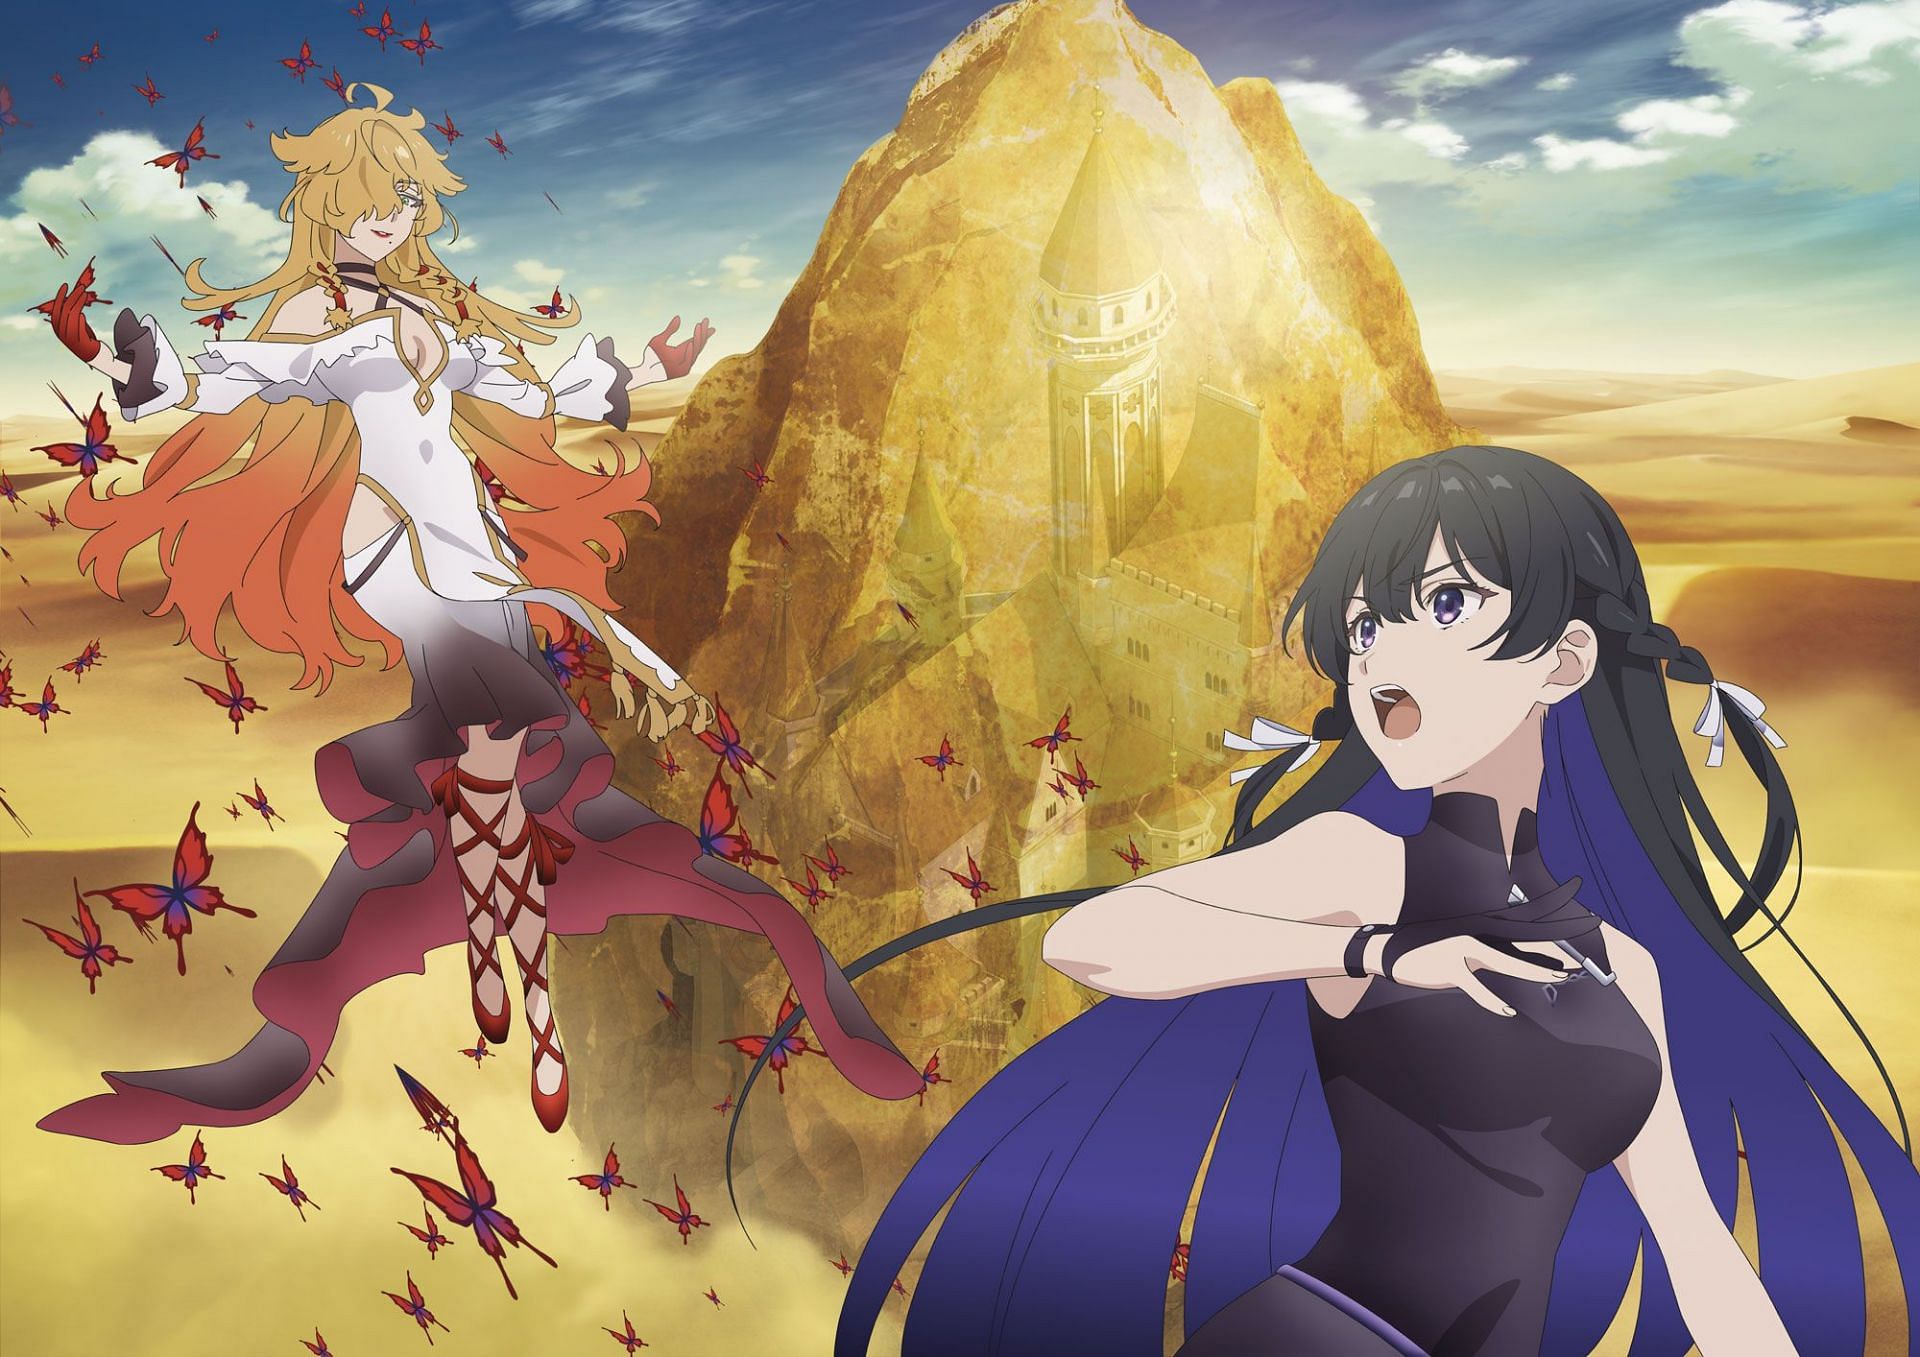 The new visual for the anime (Image via ENGI Studios)